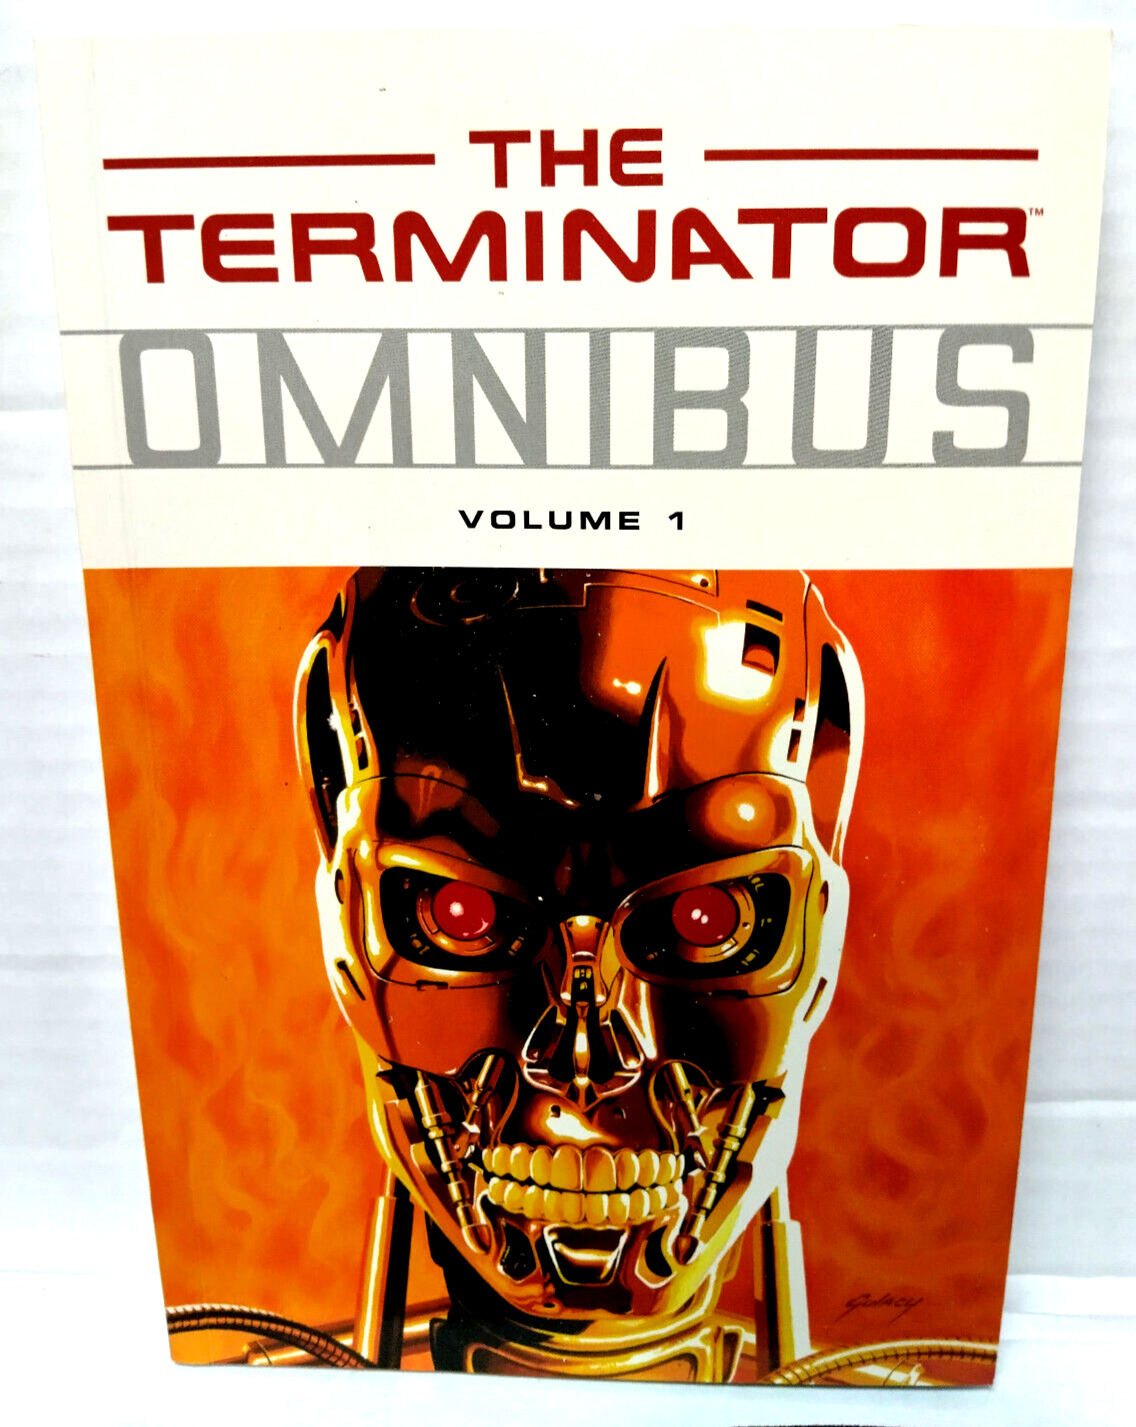 THE TERMINATOR OMNIBUS VOL. 1 By James Robinson, John Arcudi Excellent condition